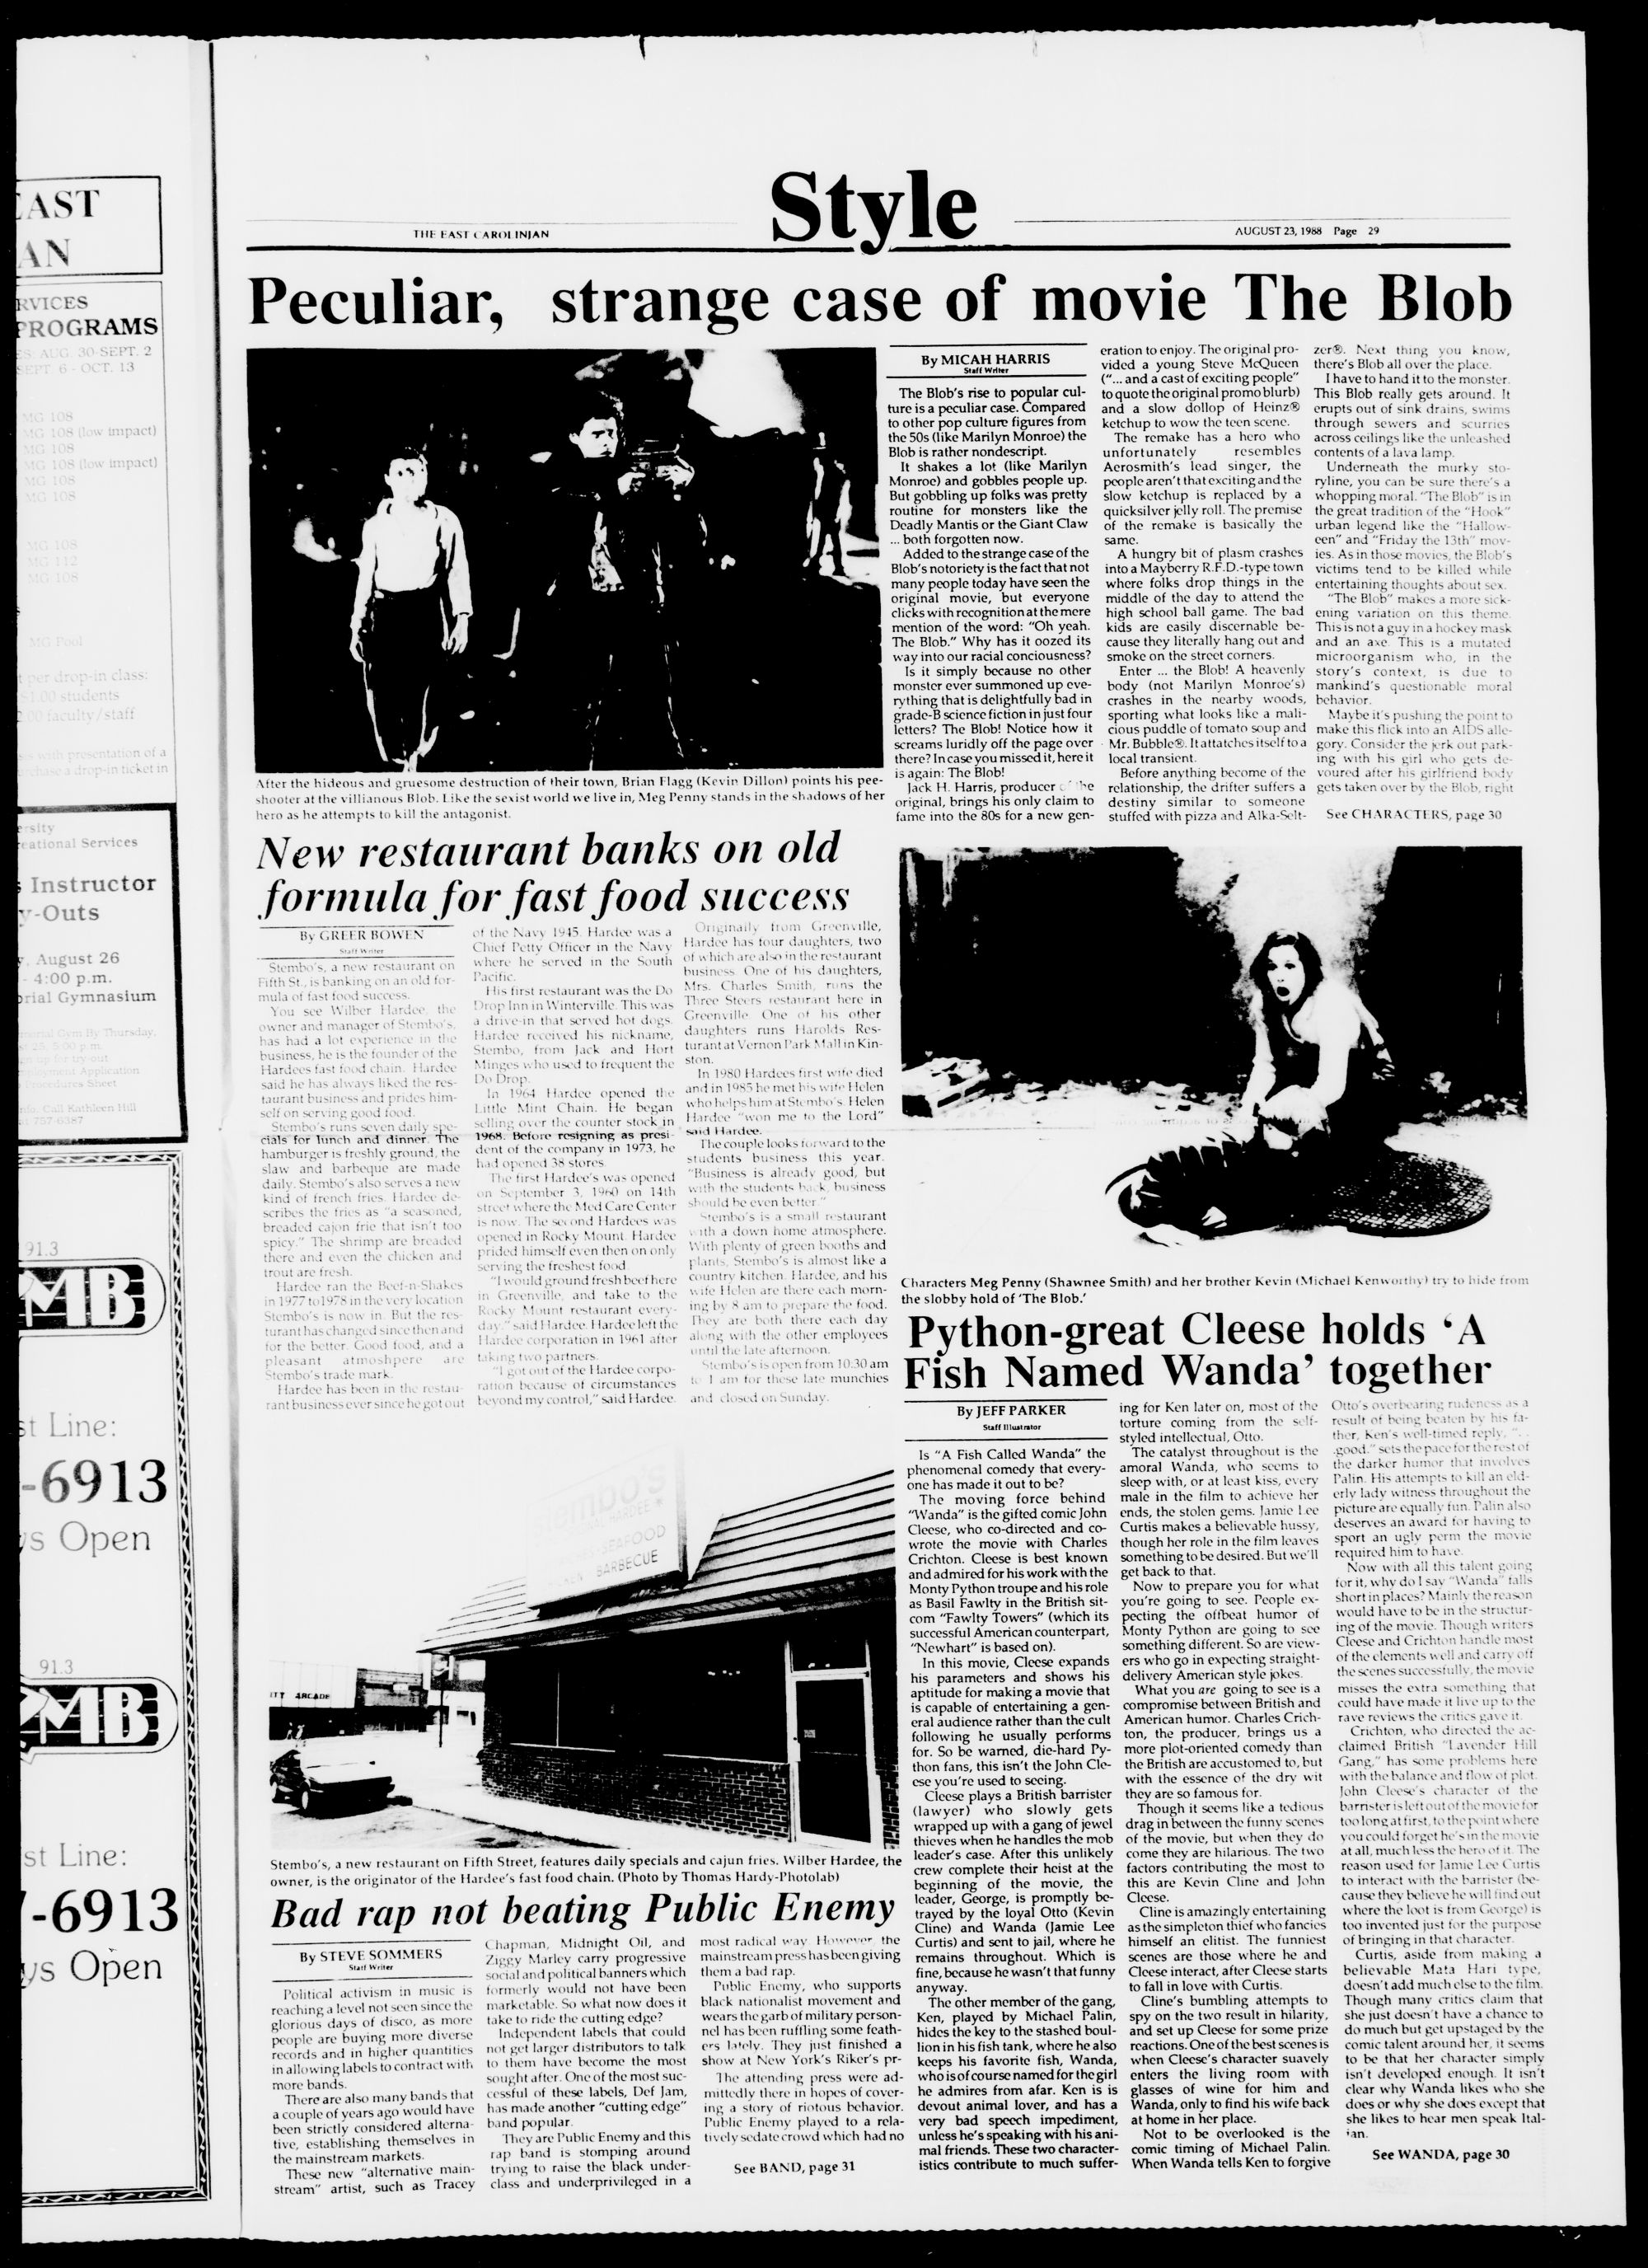 The East Carolinian, August 23, 1988 - ECU Digital Collections